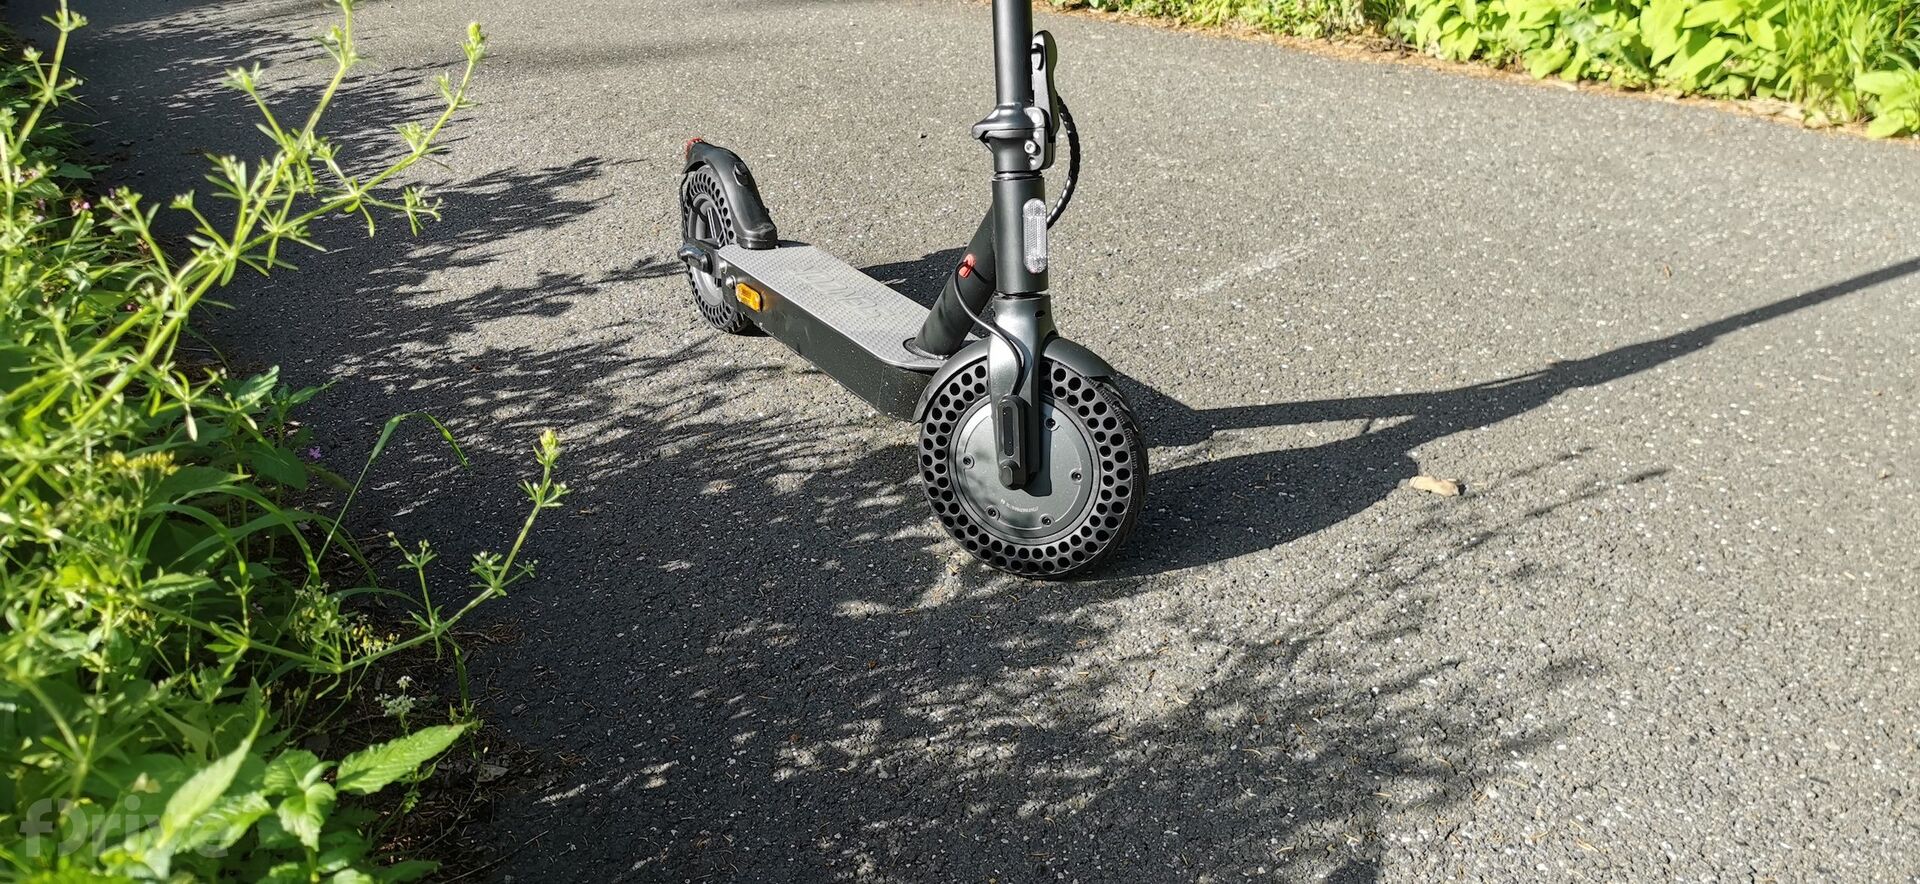 Sencor Scooter Two Long Range 2021